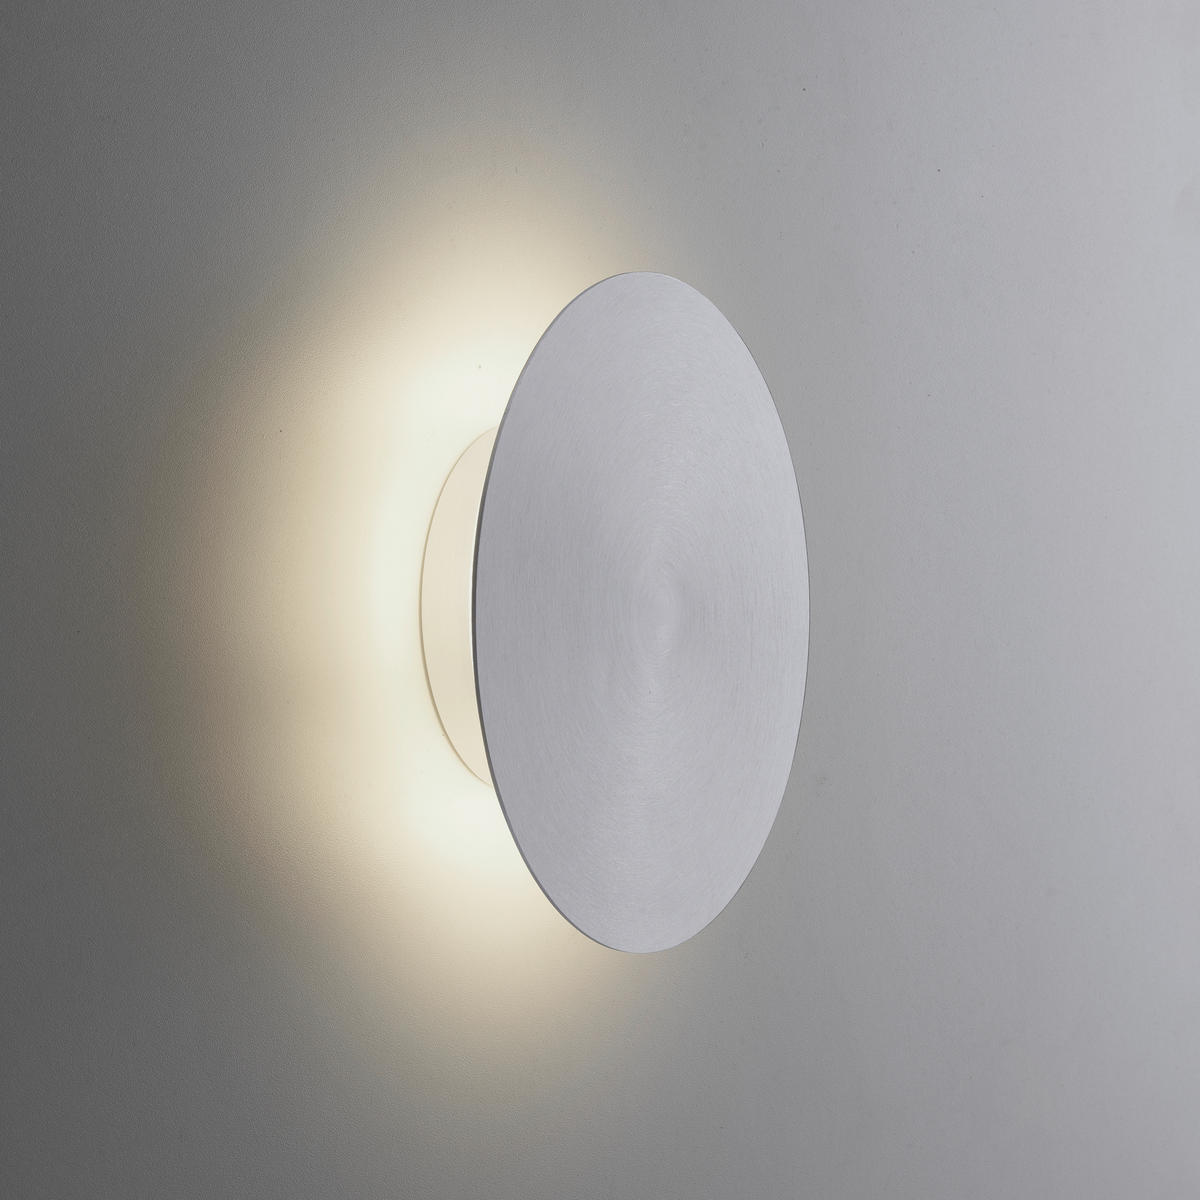 Paul Neuhaus LED-WANDLEUCHTE Puntua 18/4,5/18 cm jetzt nur online ➤